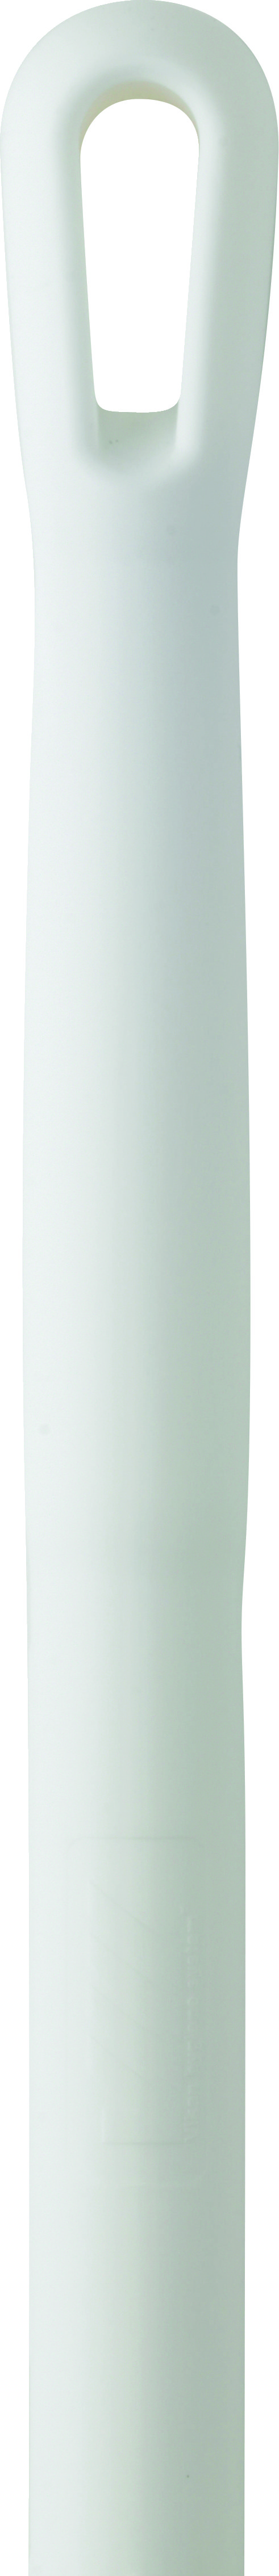 Рукоятка Vikan эргономичная алюминиевая, 1510 мм, белая